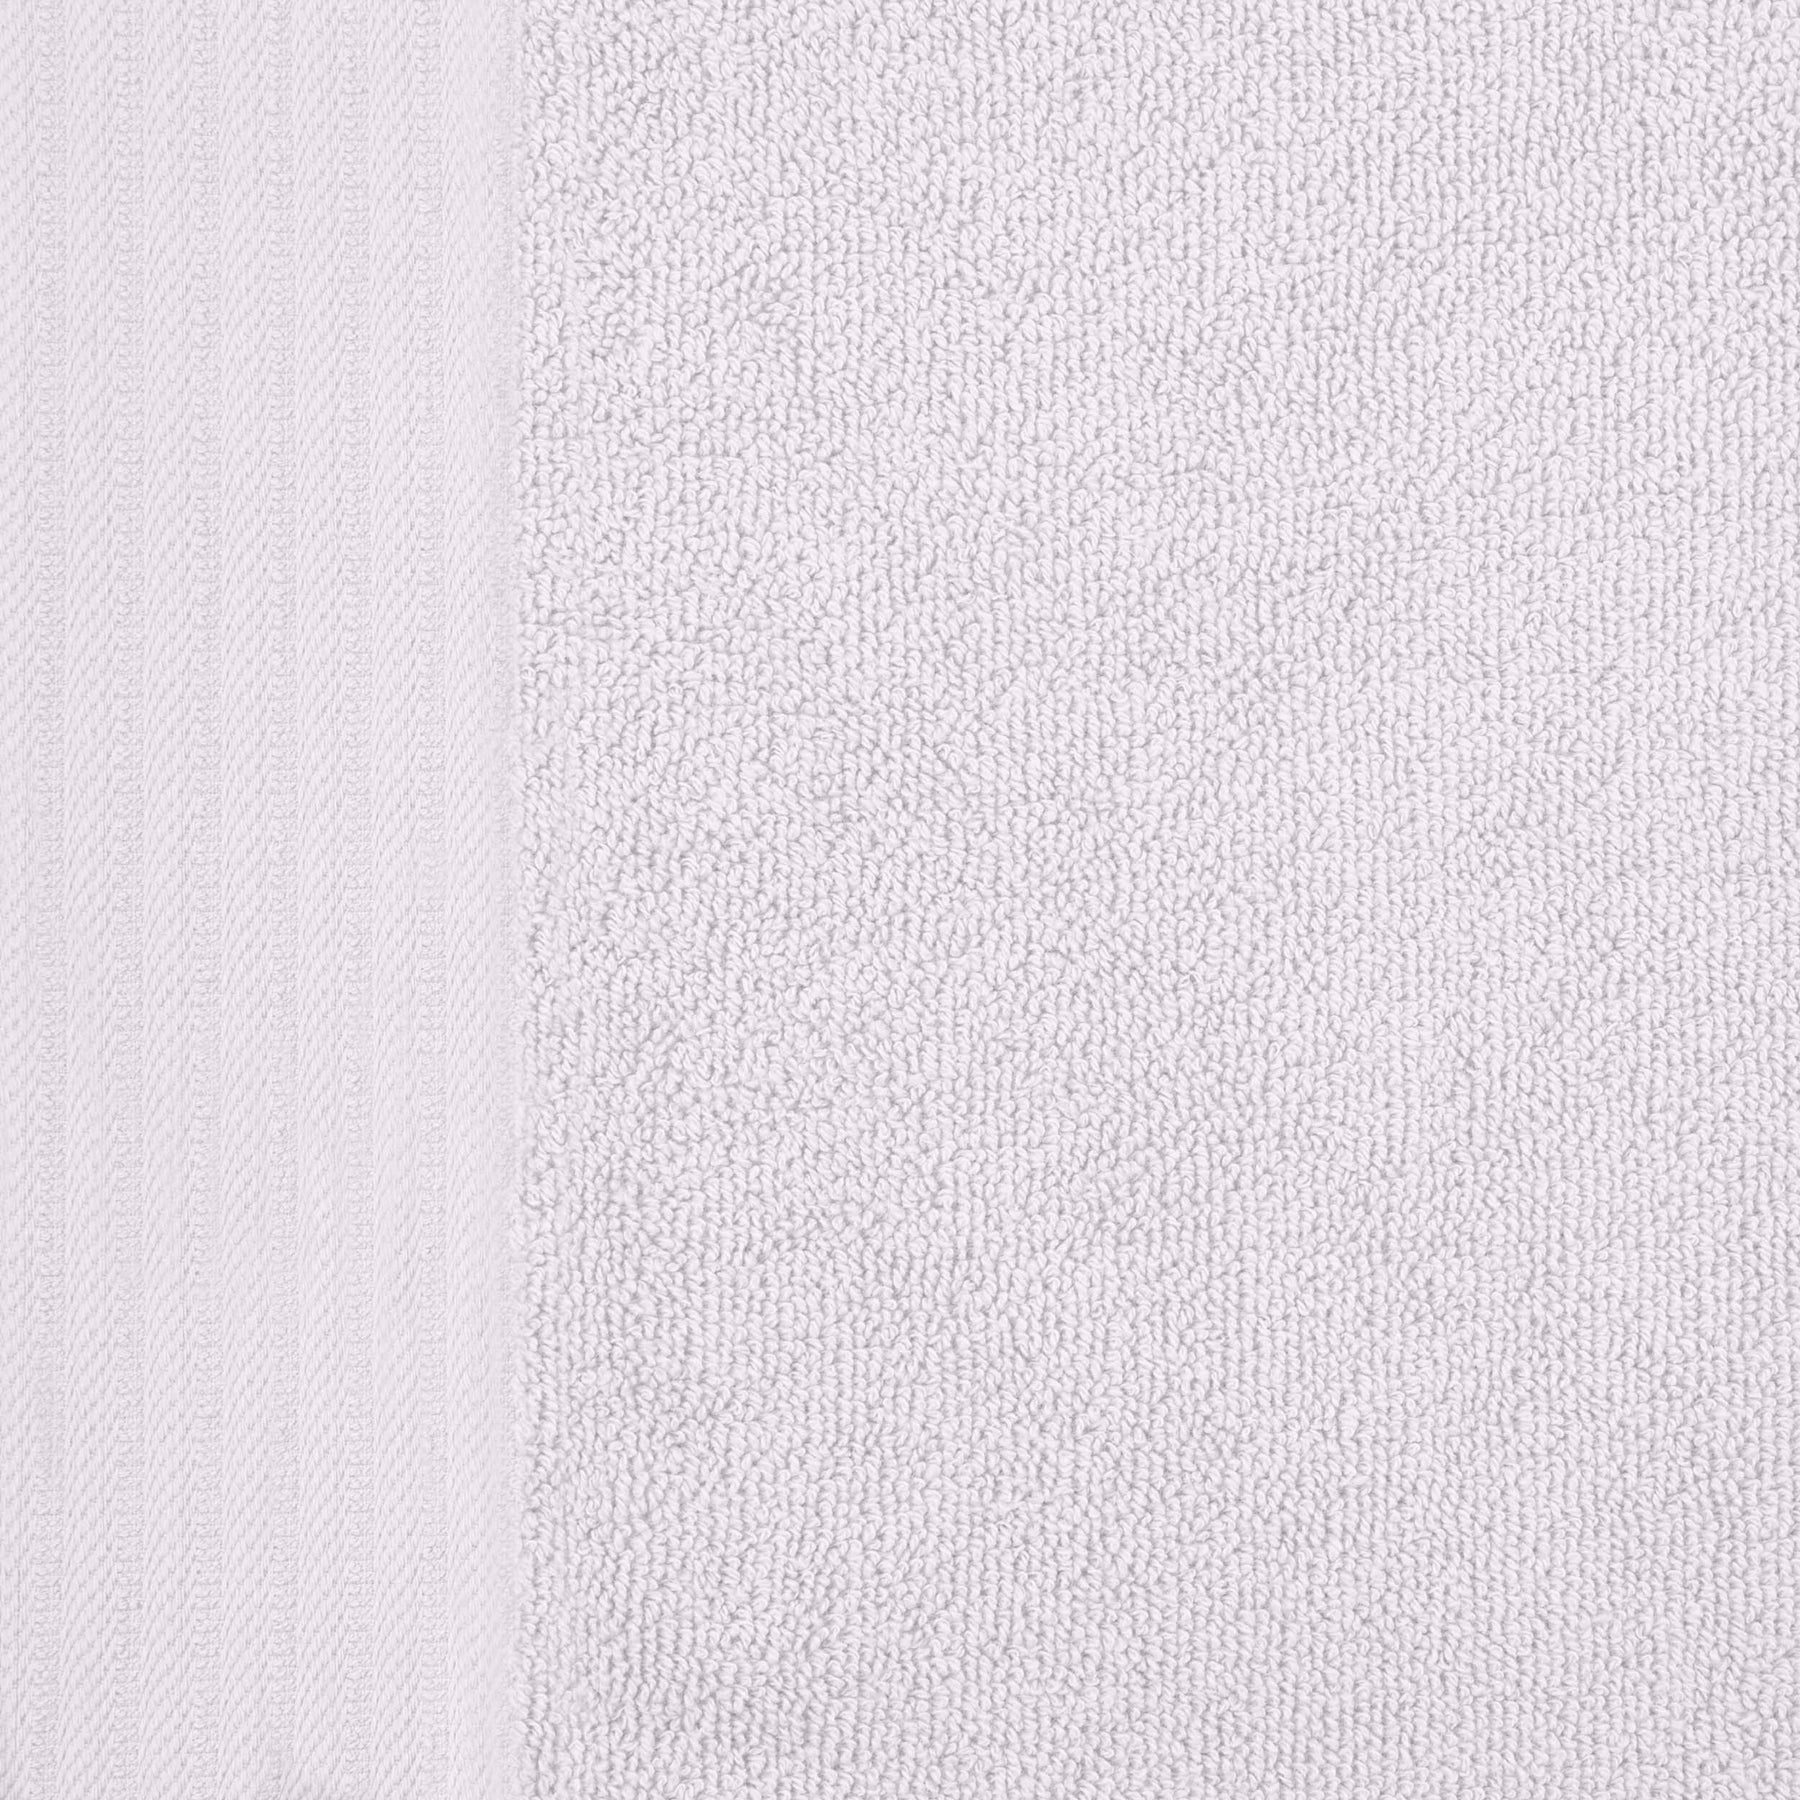 Premium Turkish Cotton Jacquard Herringbone and Solid 6-Piece Hand Towel Set -  White